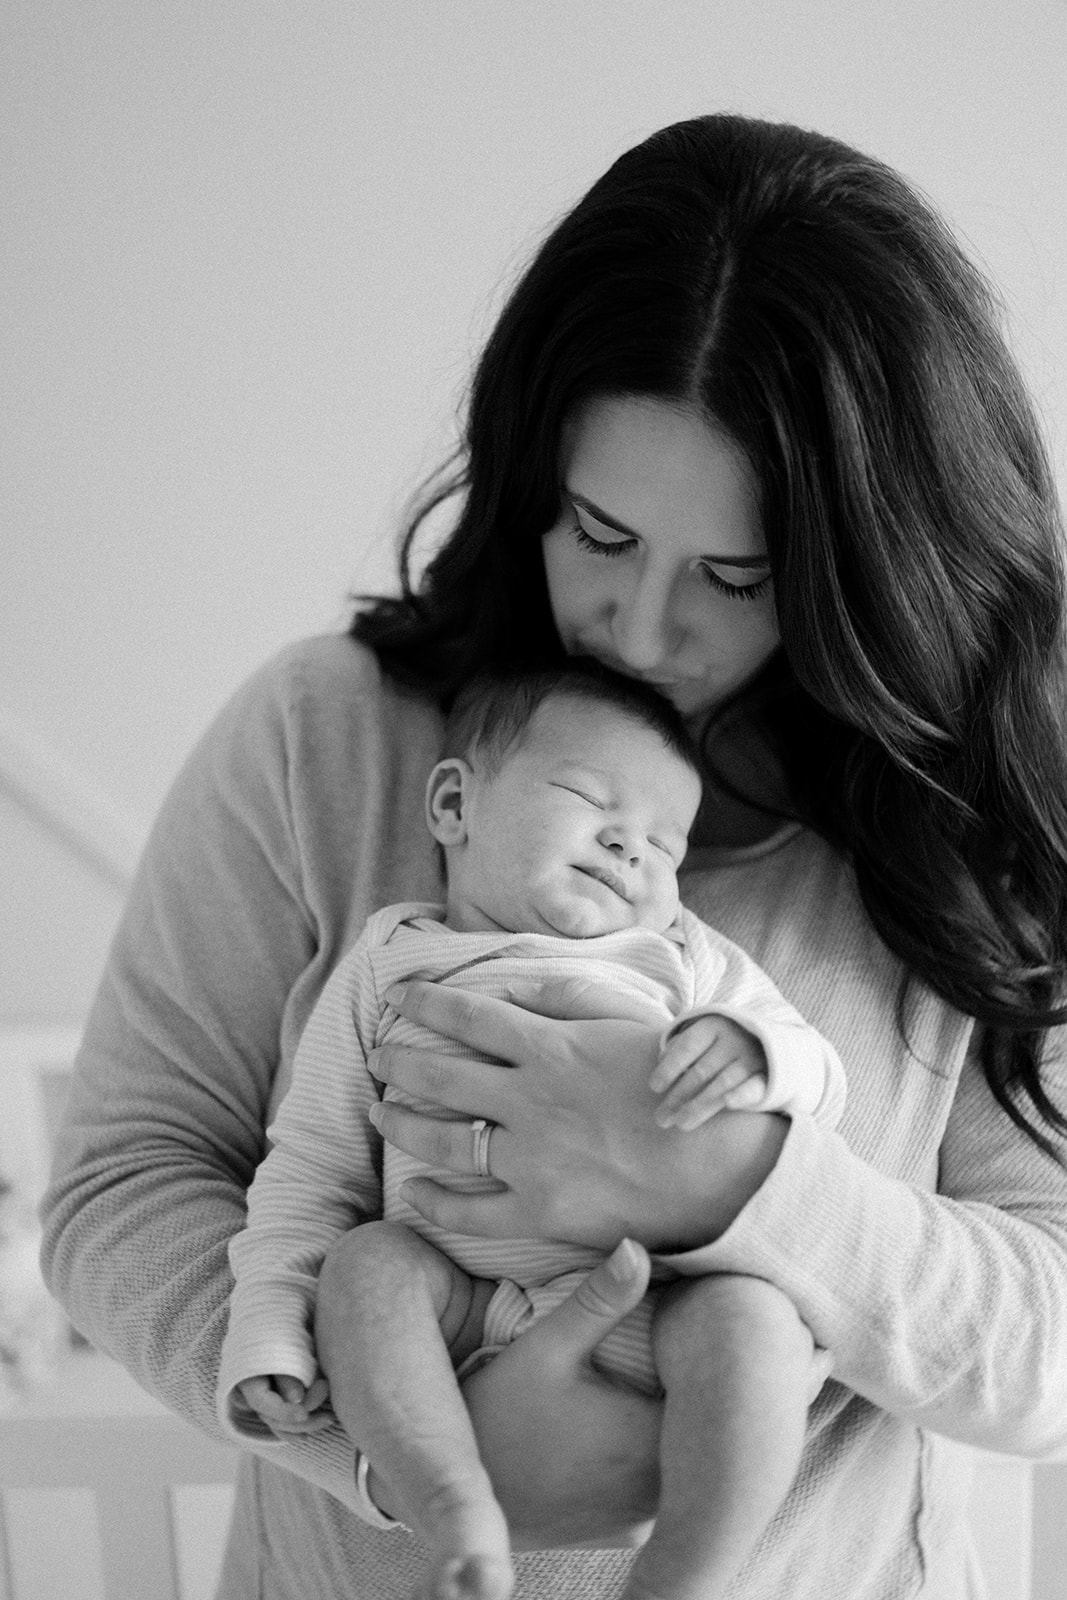 Newborn being held in moms arms.